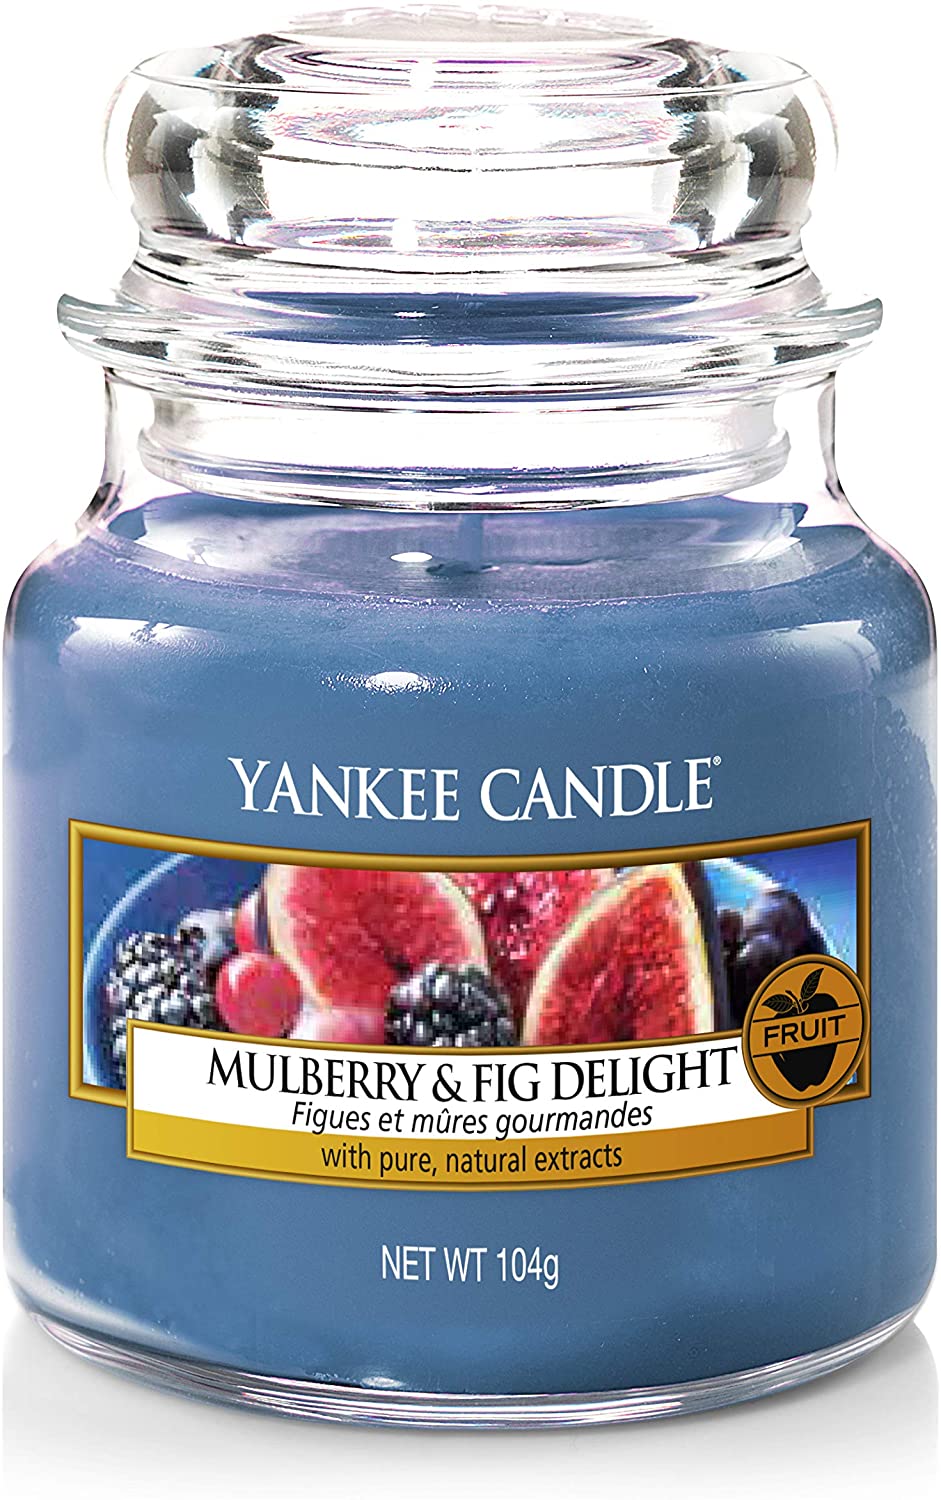 Yankee Candle Jar Candle